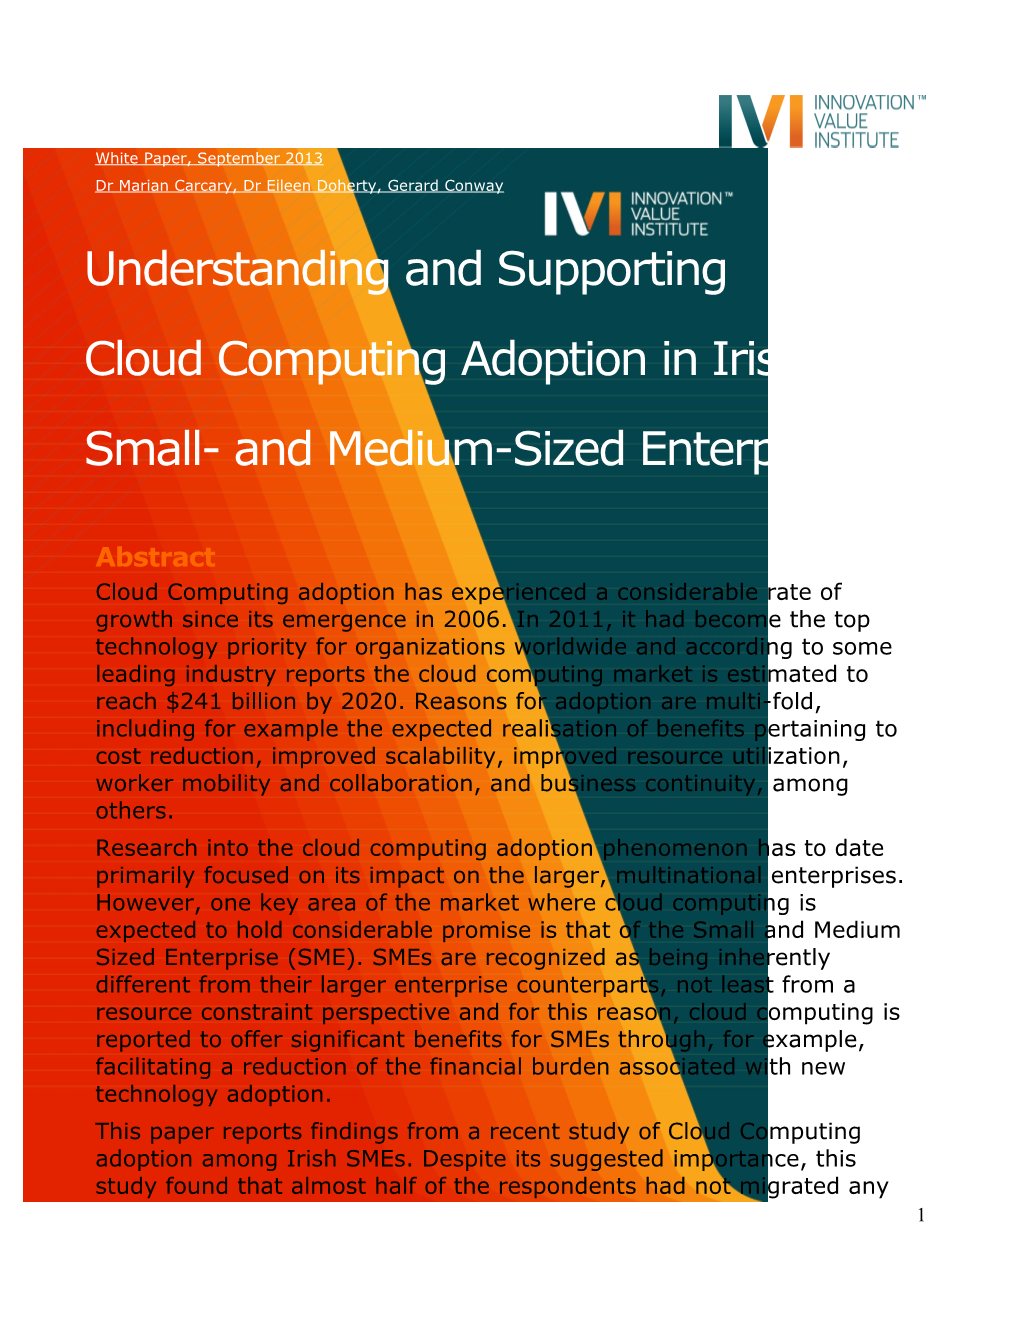 Understandingand Supporting Cloud Computing Adoption in Irish Small- and Medium-Sized